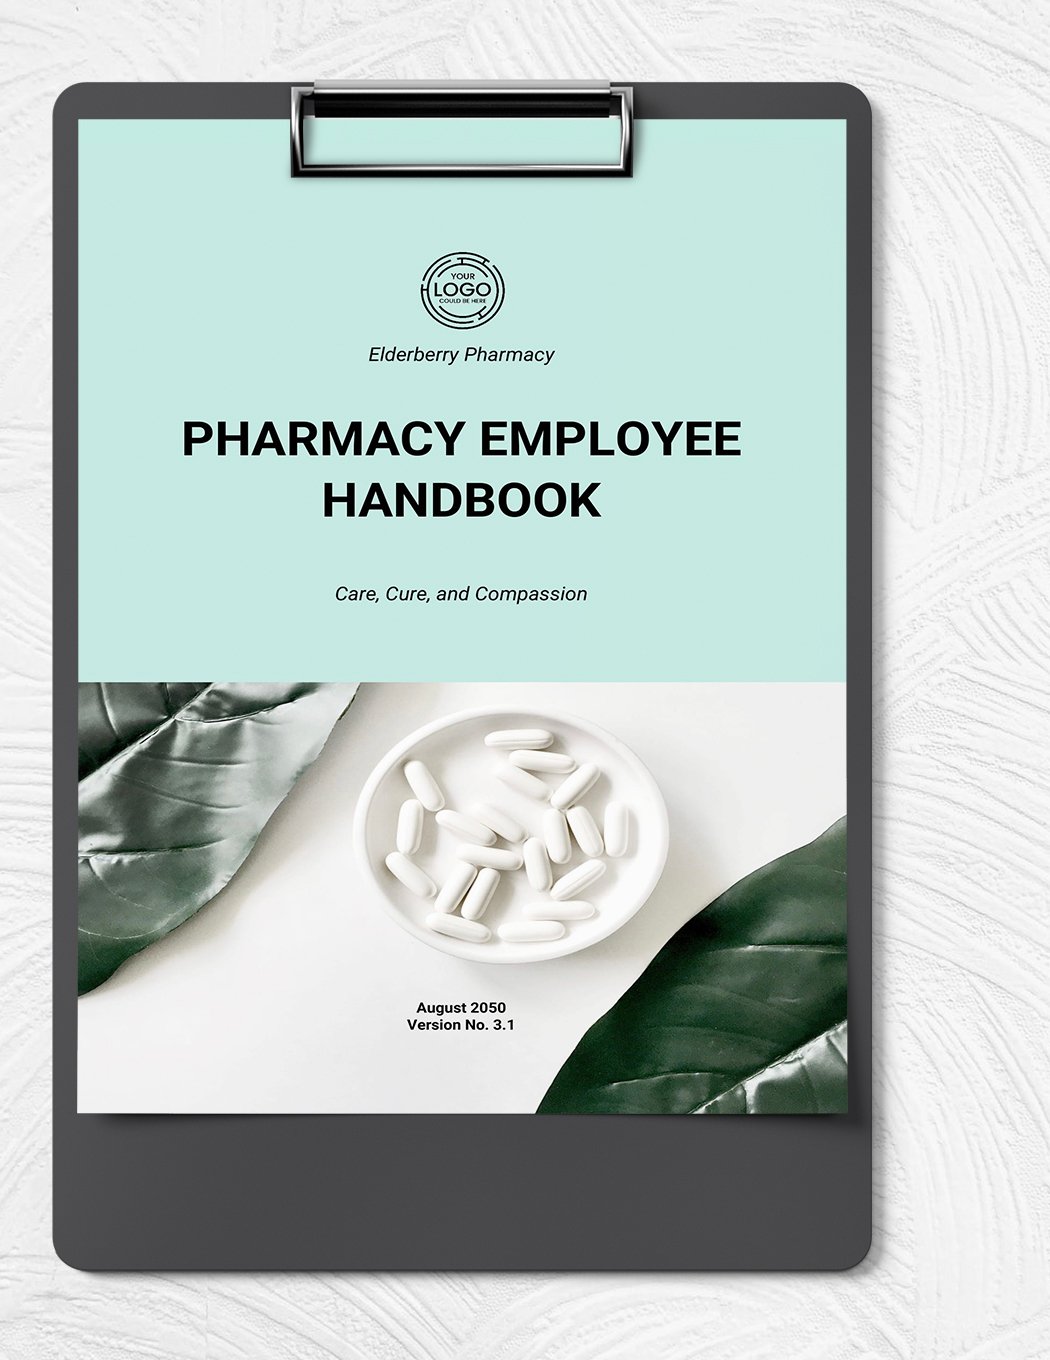 Pharmacy Employee Handbook Template in Word, Google Docs